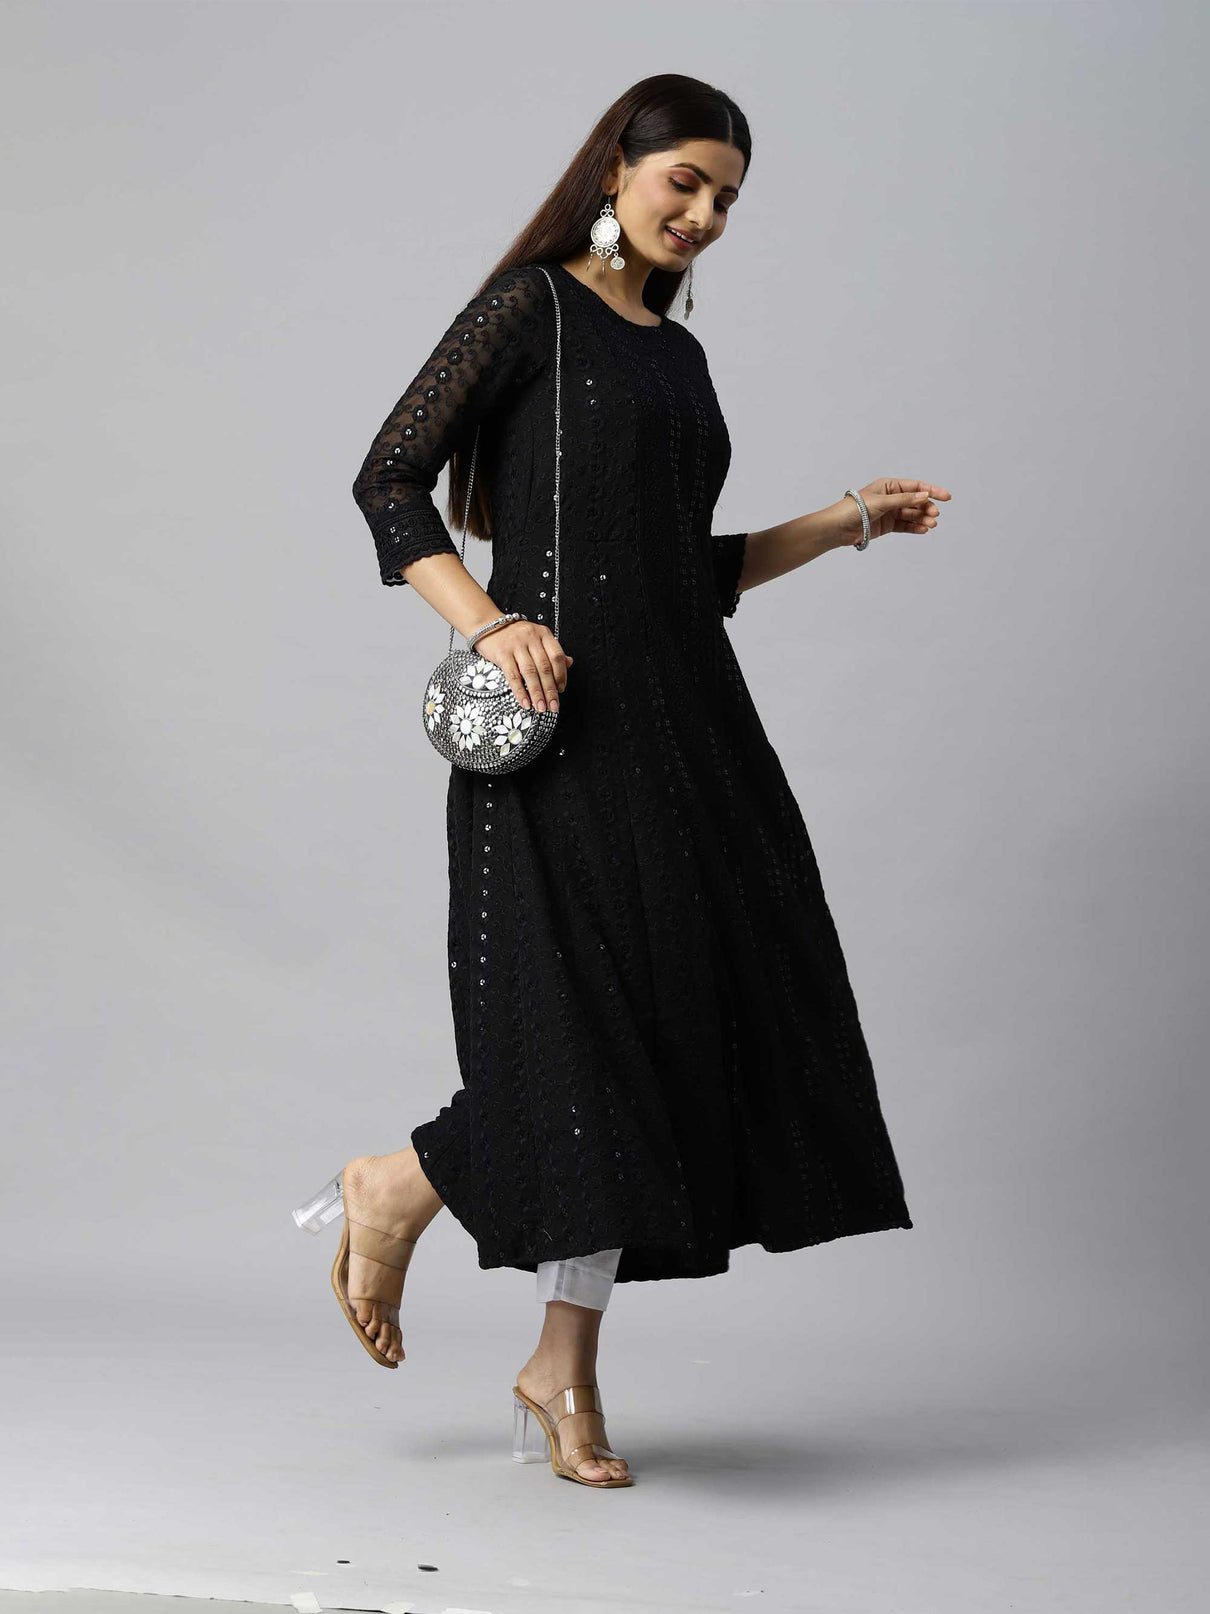 A full hakoba embroidered full length dress - Etiquette Apparel